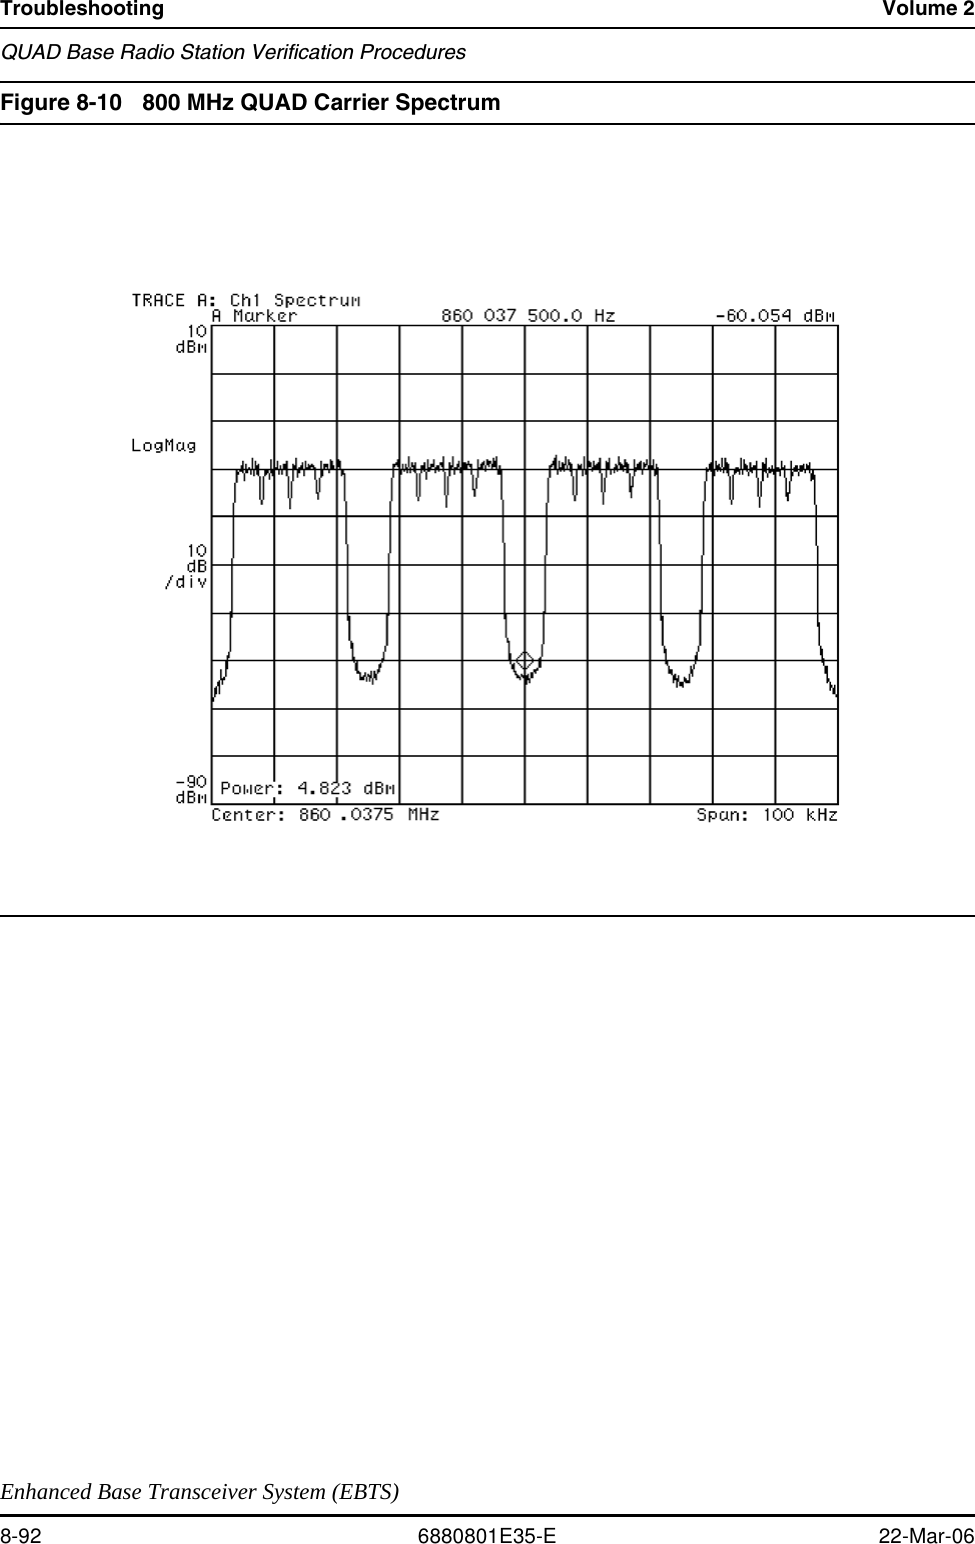 Troubleshooting Volume 2QUAD Base Radio Station Verification ProceduresEnhanced Base Transceiver System (EBTS)8-92 6880801E35-E 22-Mar-06Figure 8-10 800 MHz QUAD Carrier Spectrum